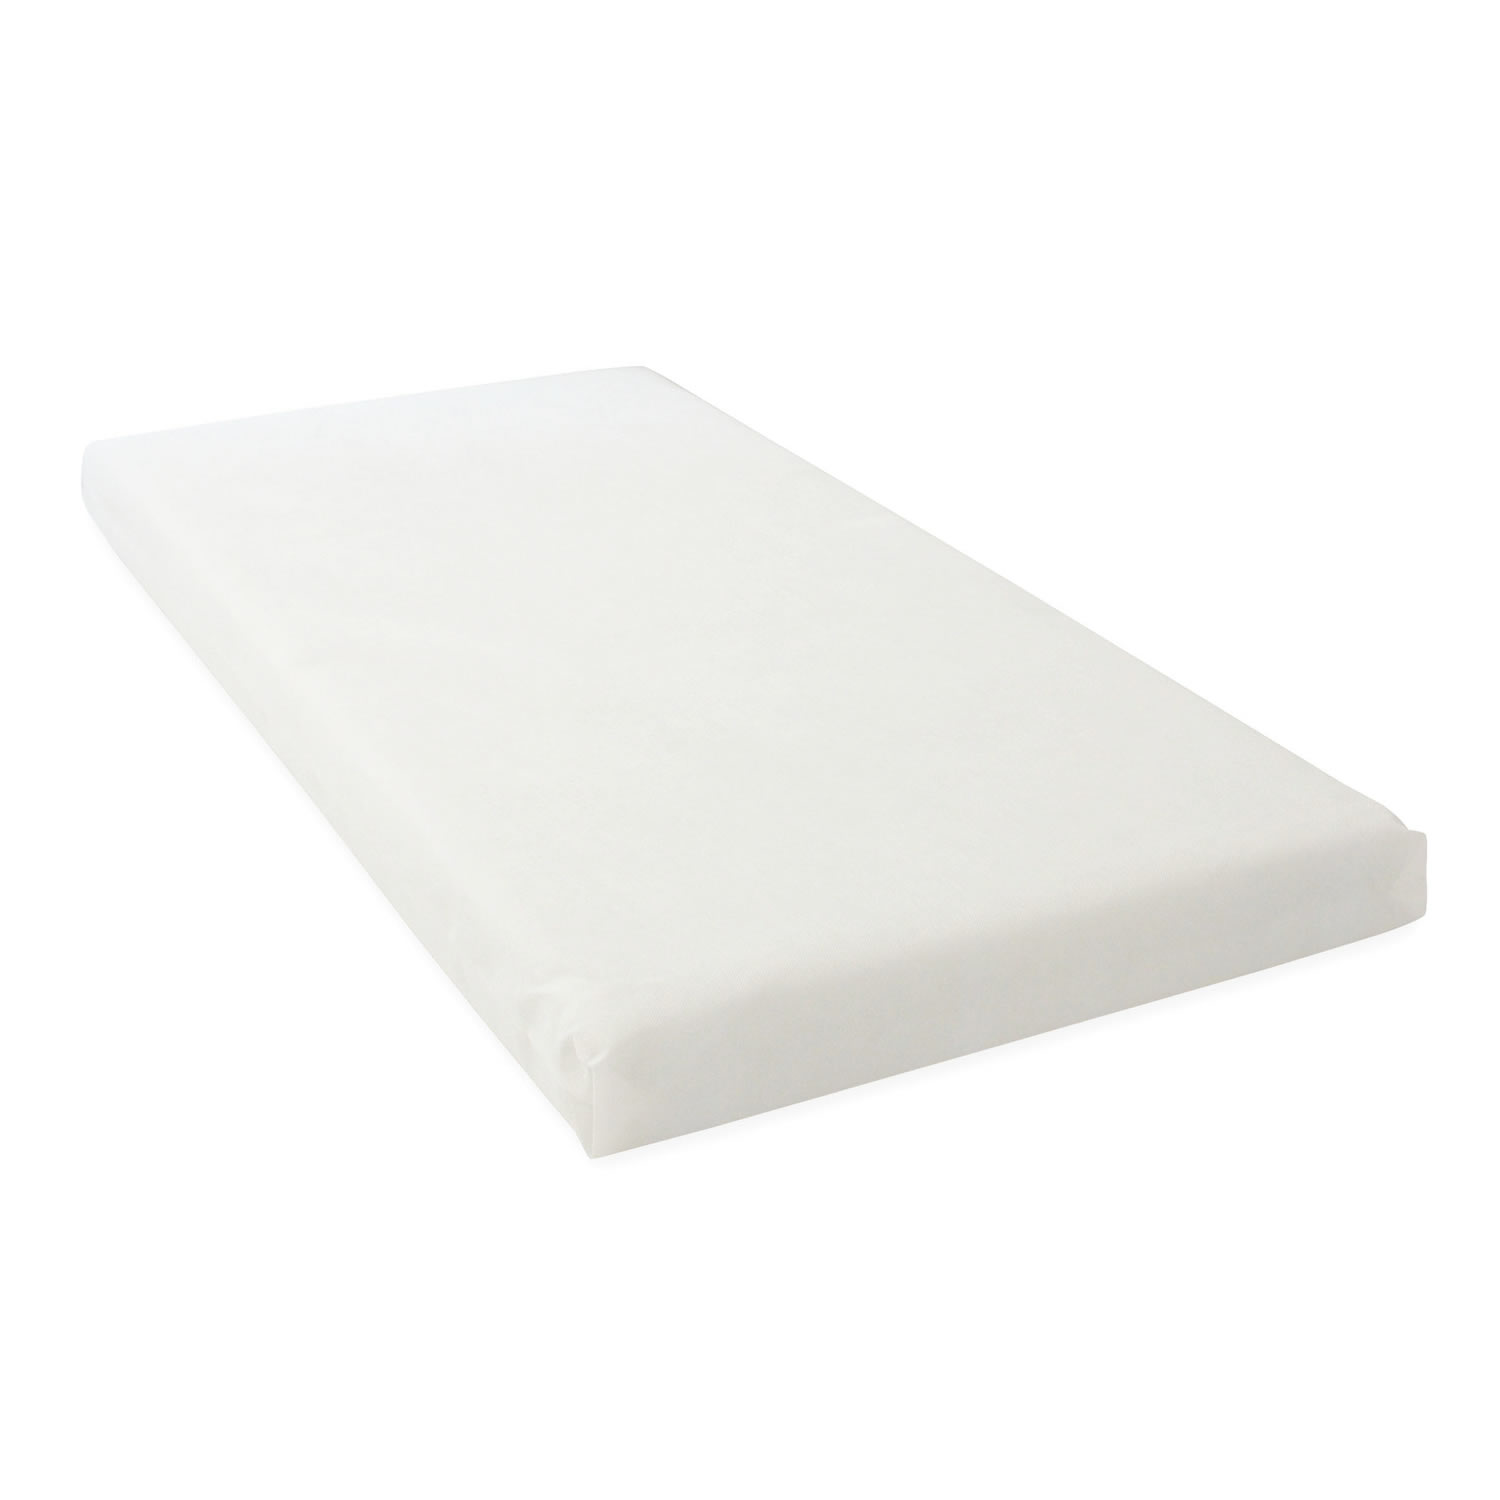 Nebraska White Foam Cot Bed Mattress